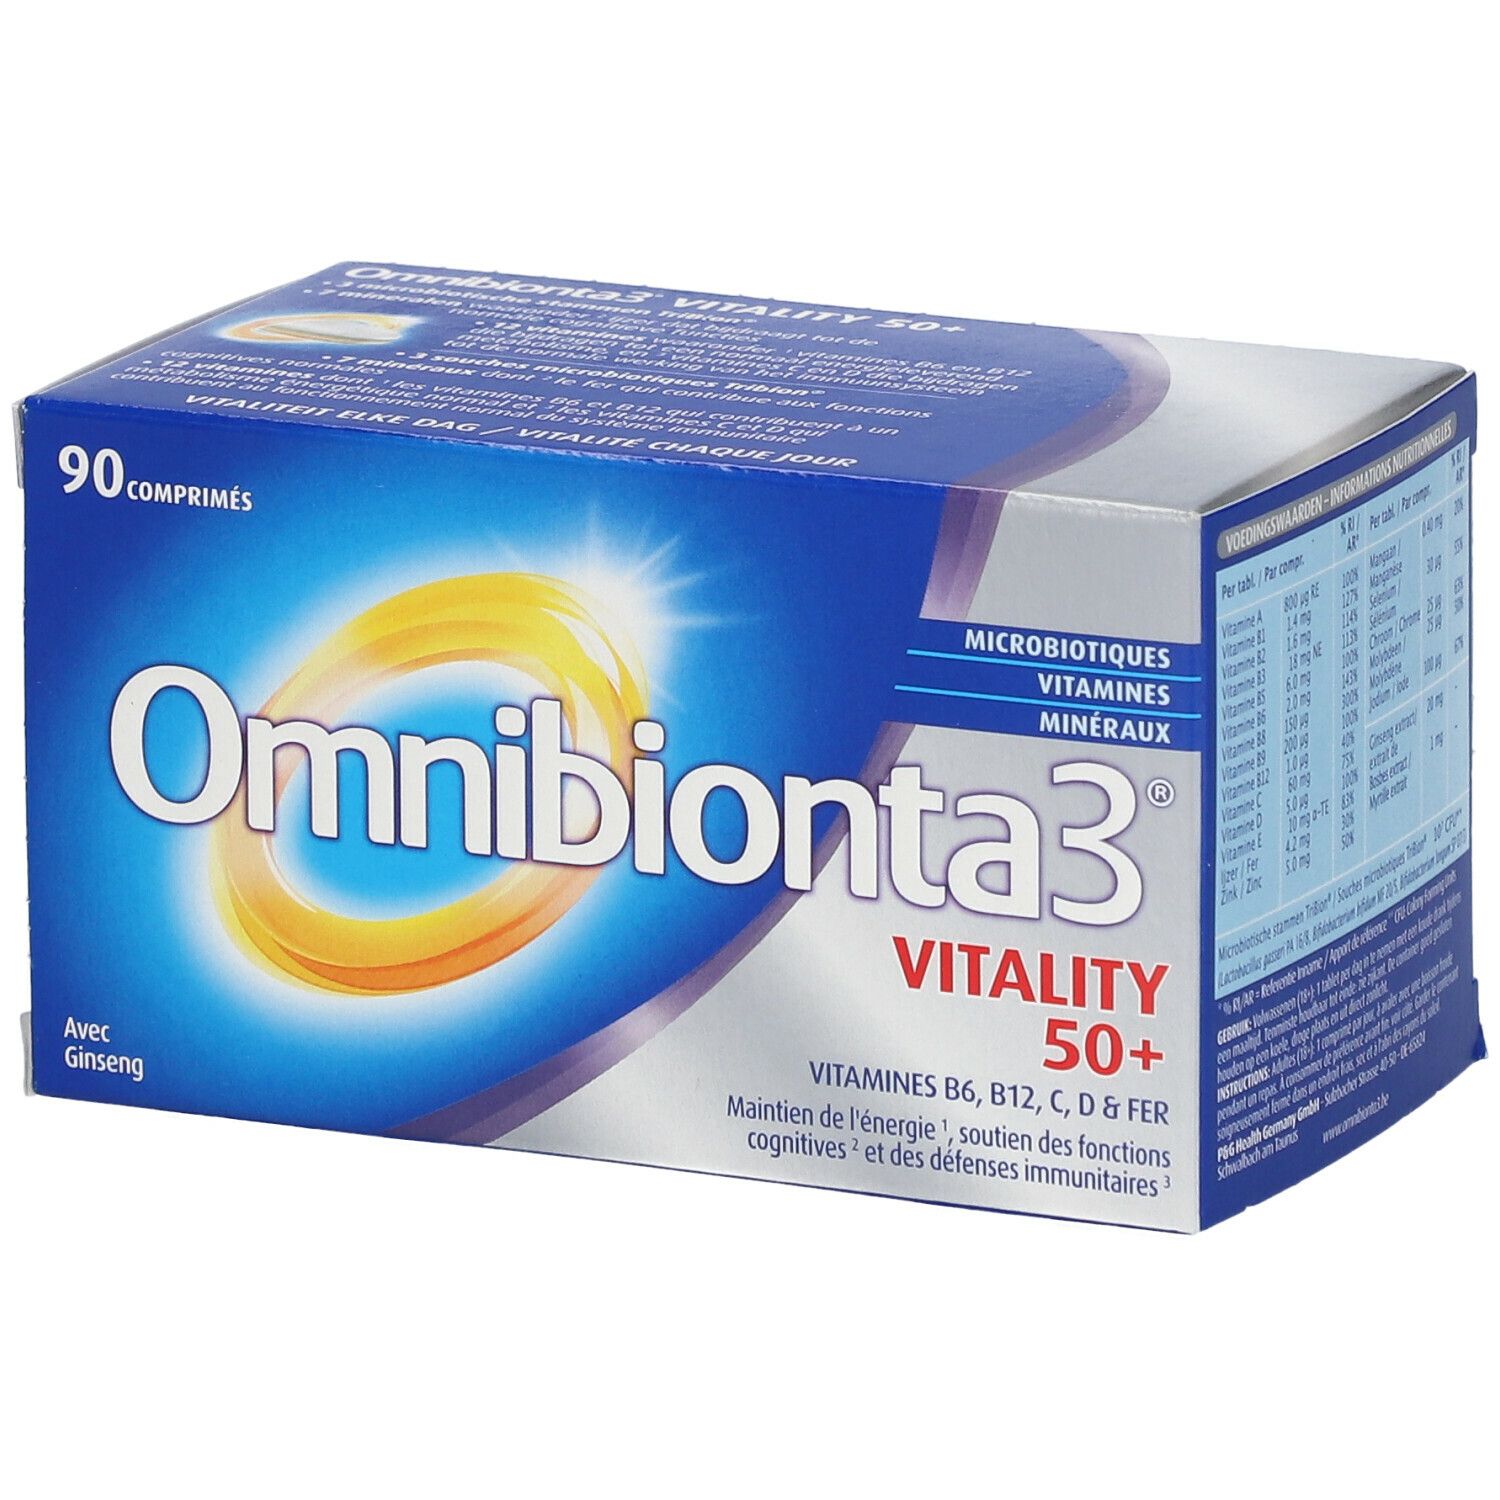 Omnibionta®3 Vitality 50+